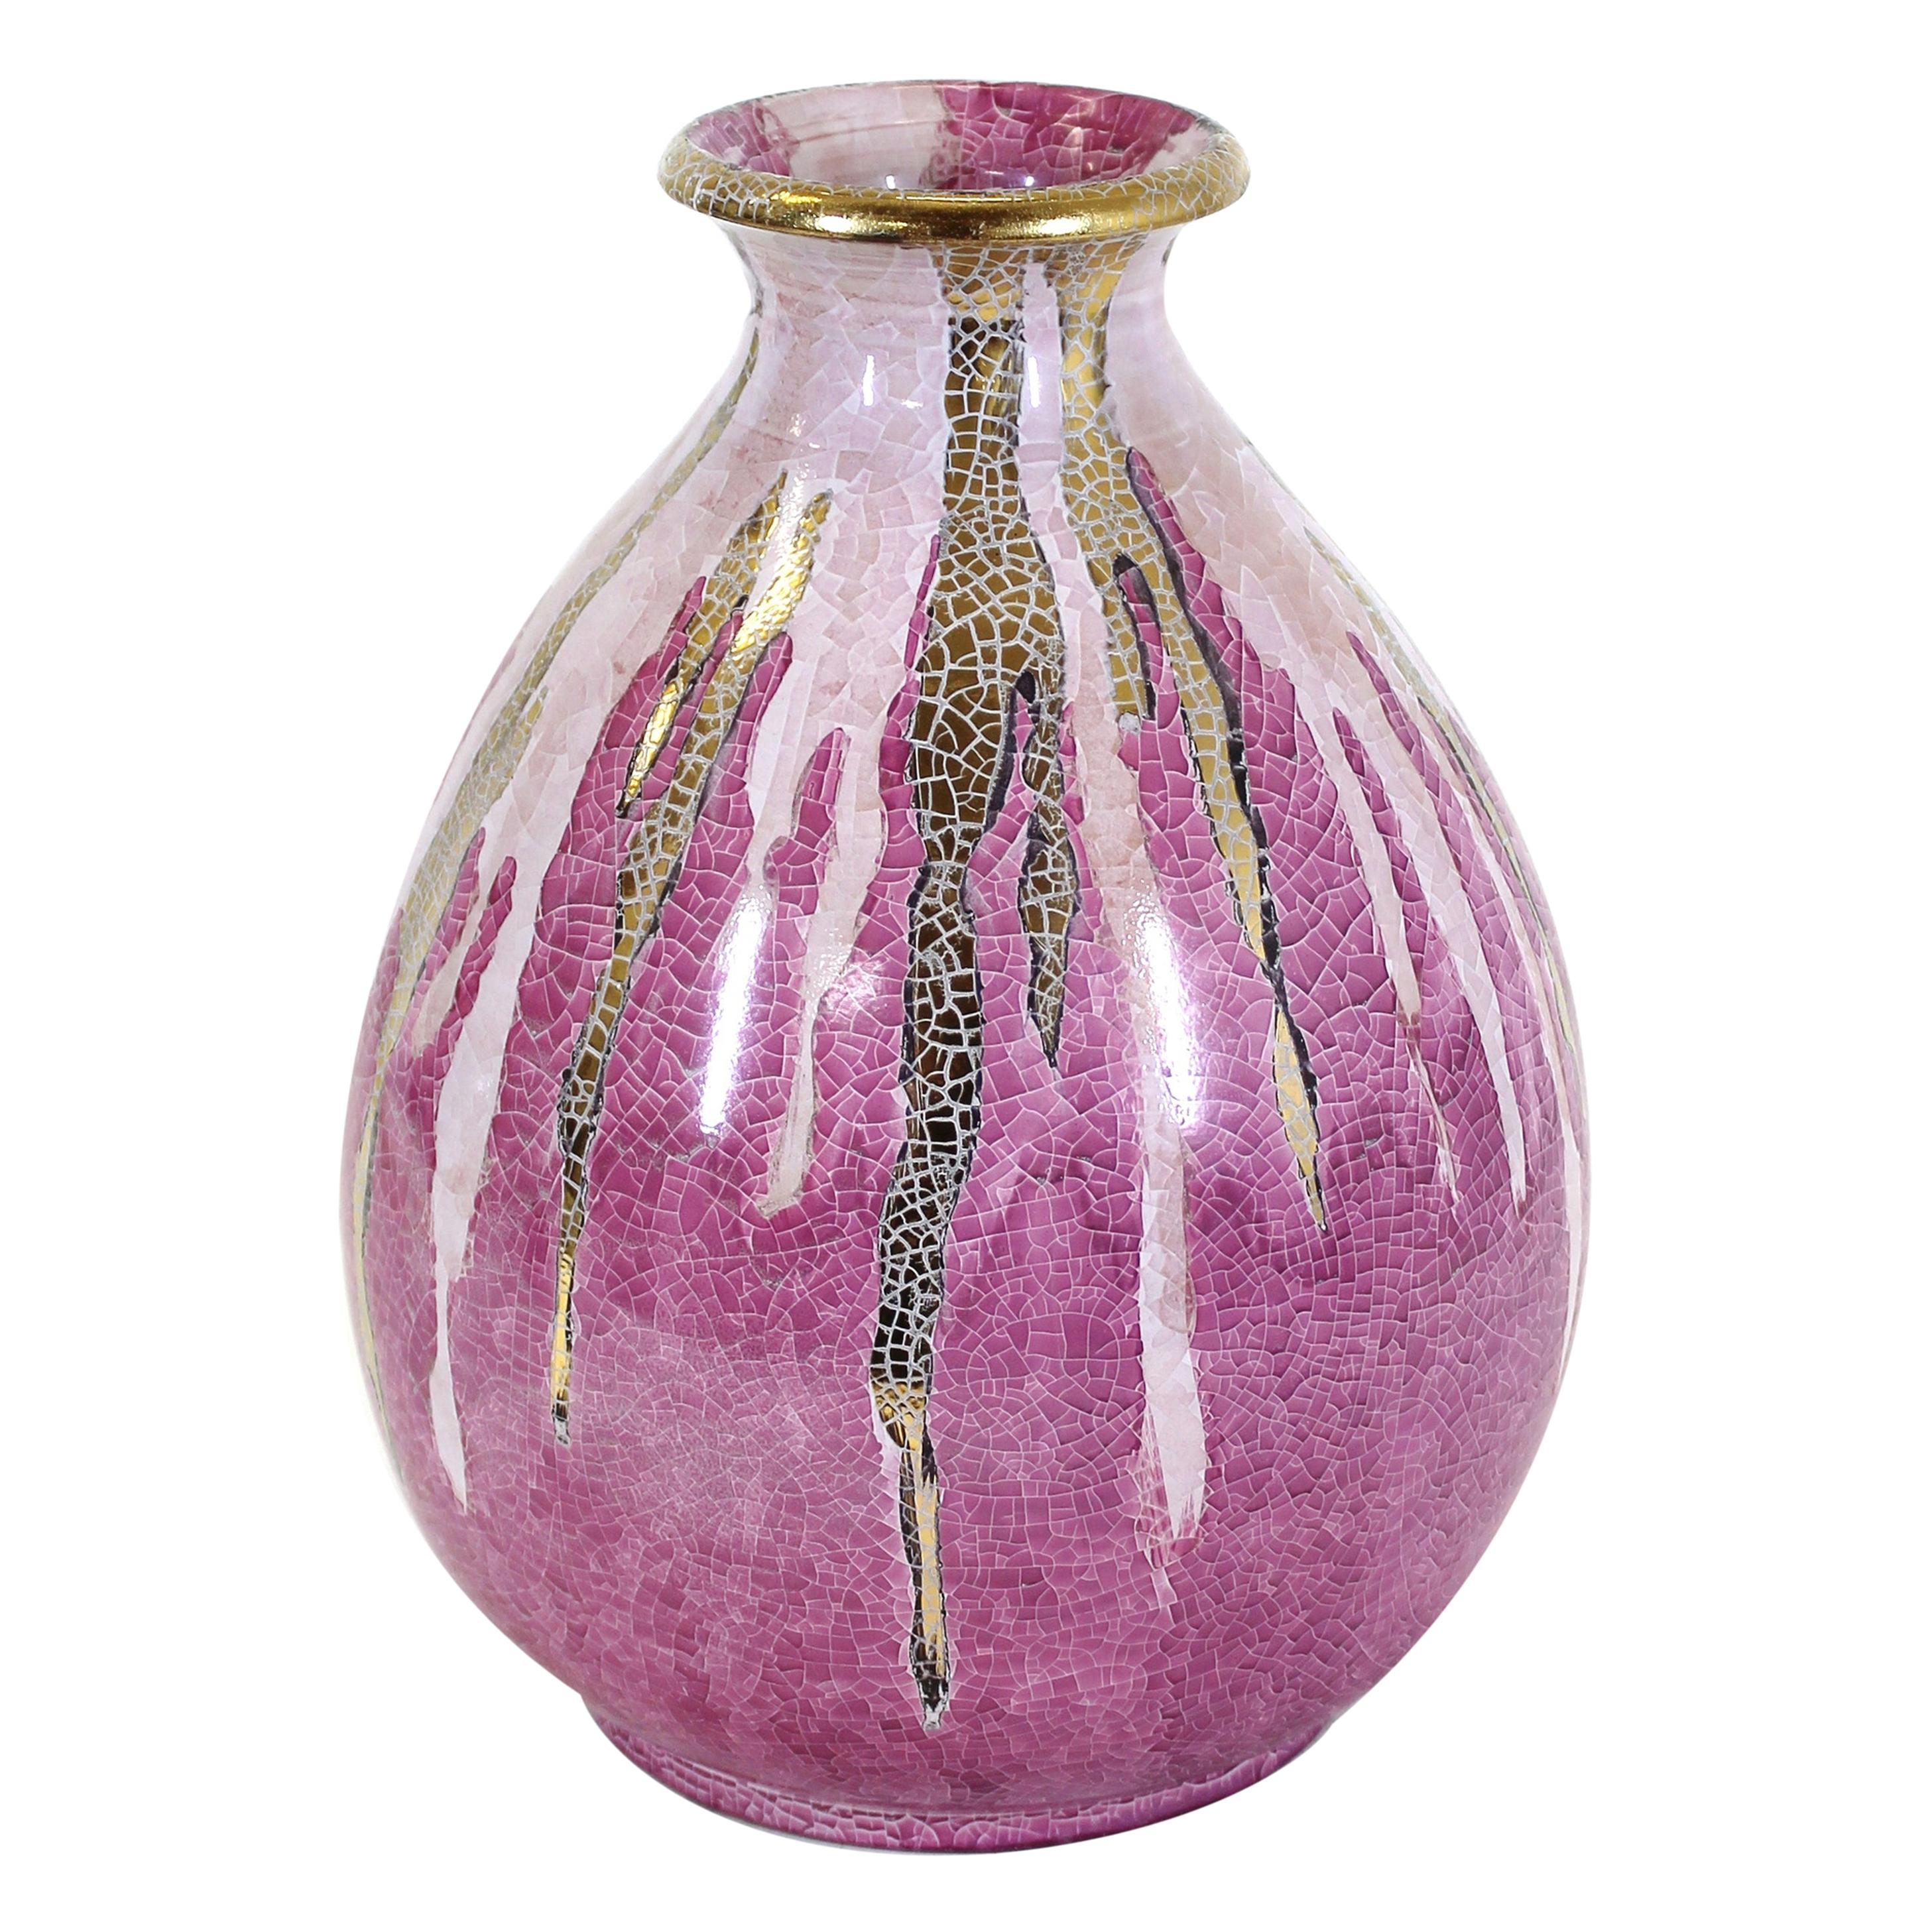 Italian Mid-Century Modern Pink Craquelure Glaze & Gold Décor Vase